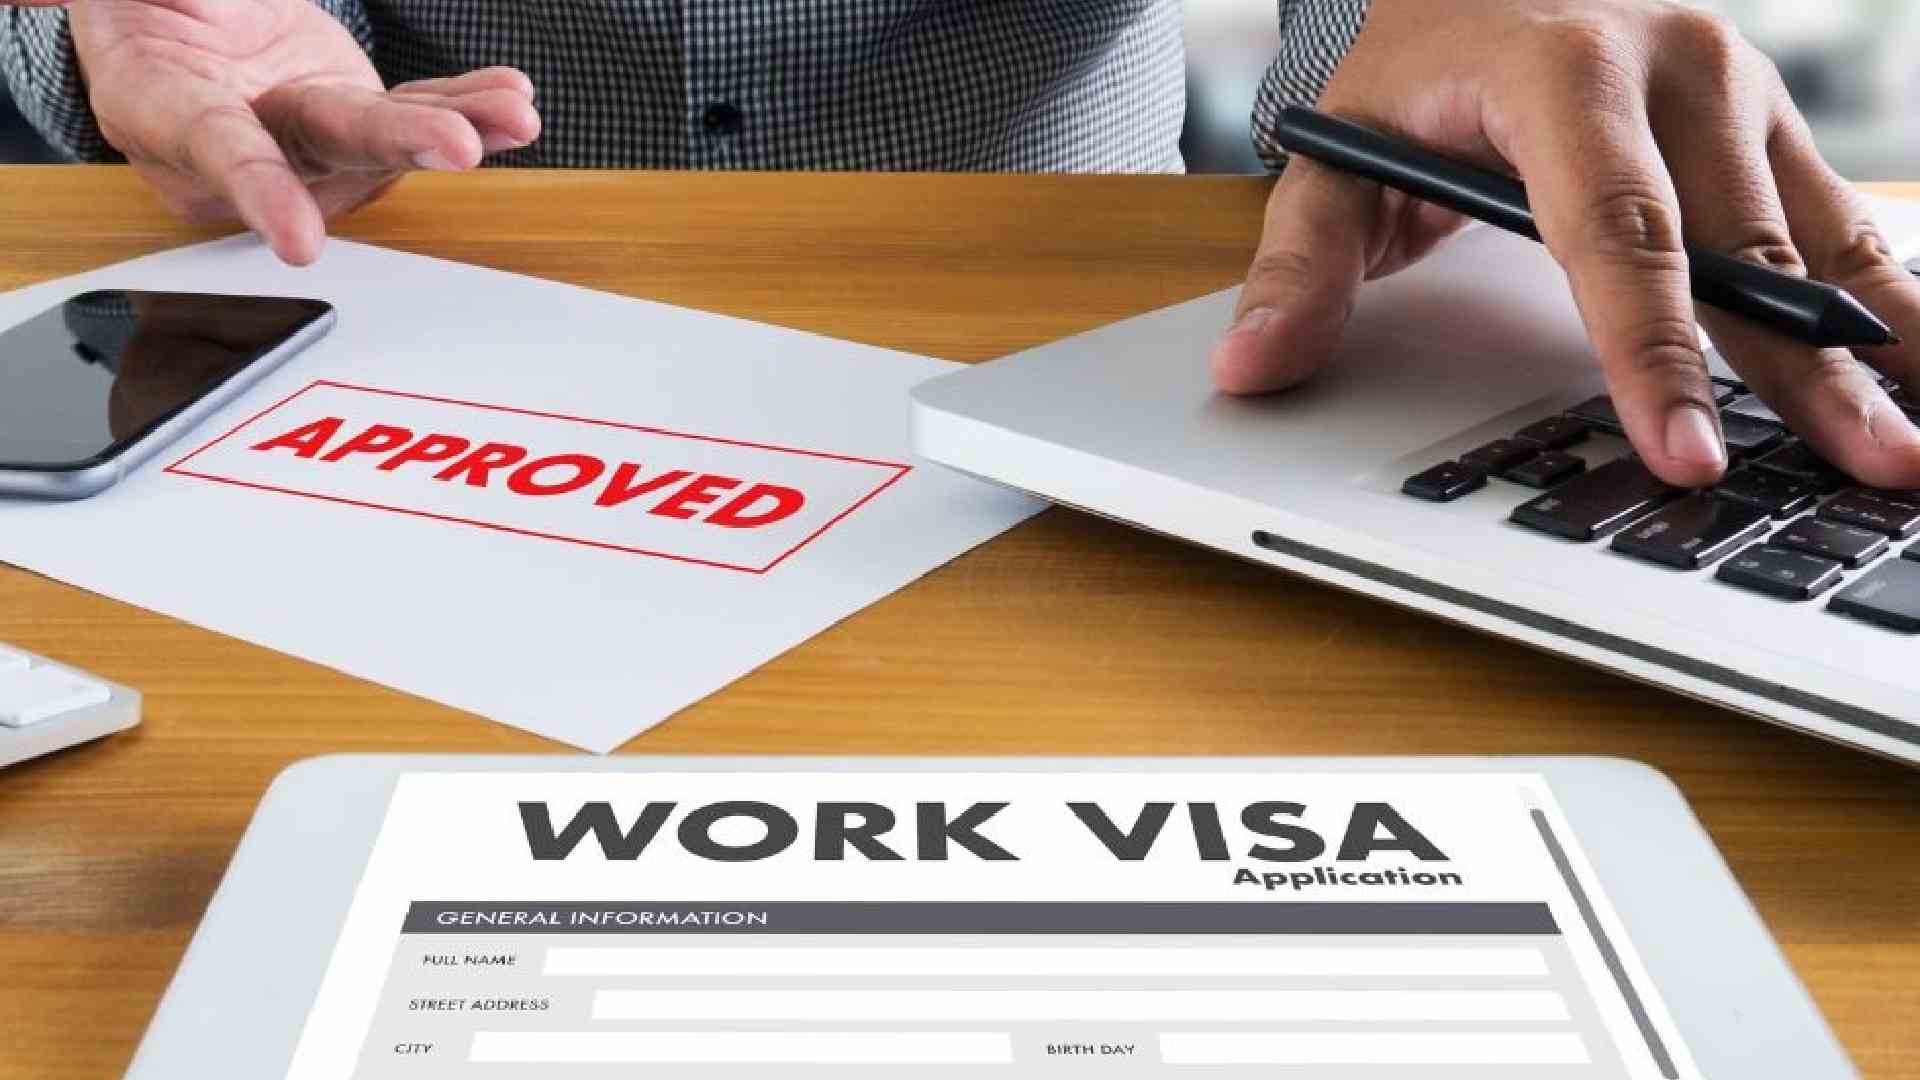 employment visa uae